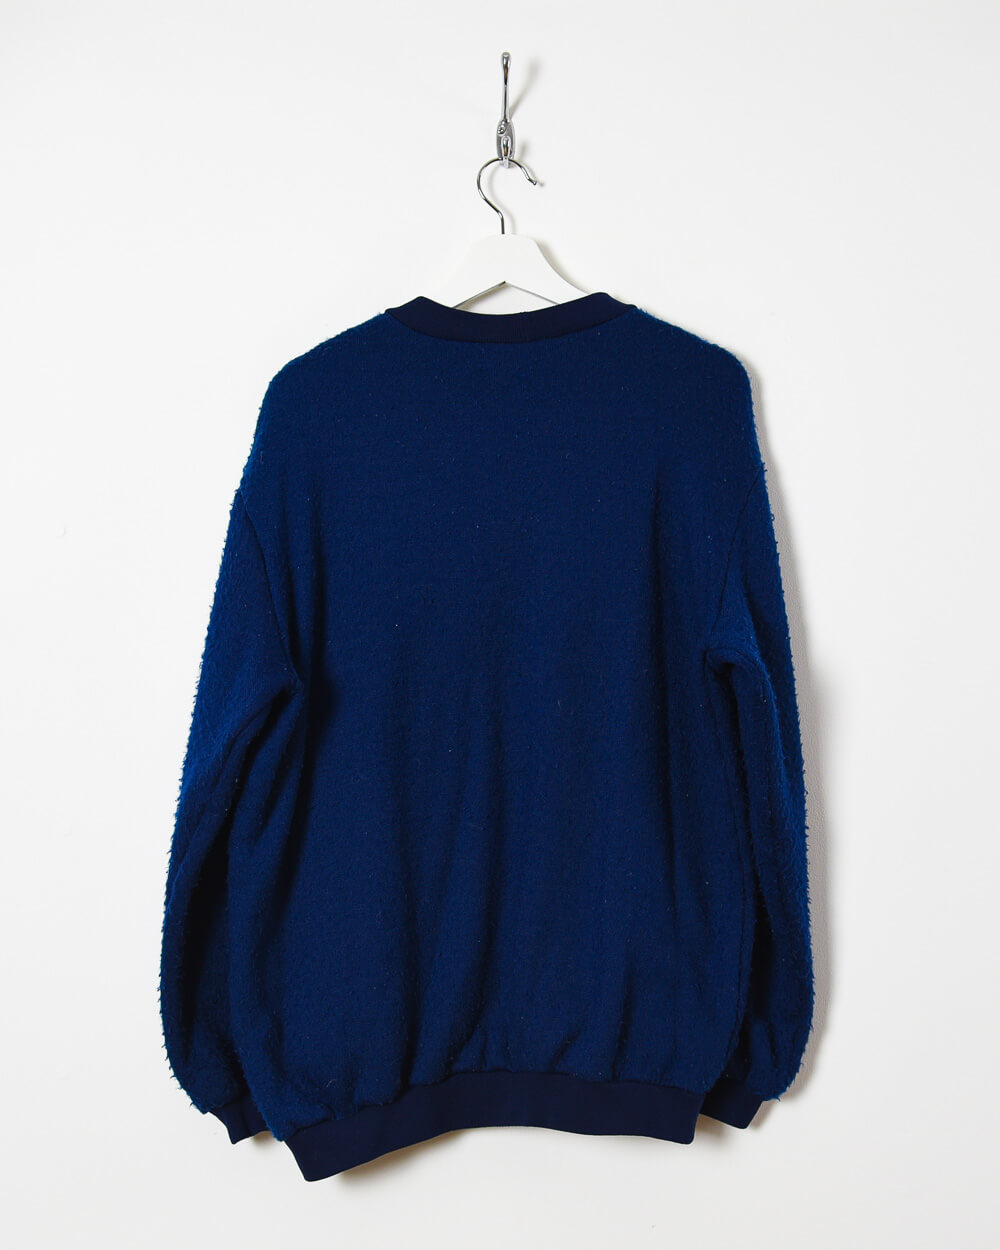 Helly Hansen Fleece Sweatshirt - Large - Domno Vintage 90s, 80s, 00s Retro and Vintage Clothing 